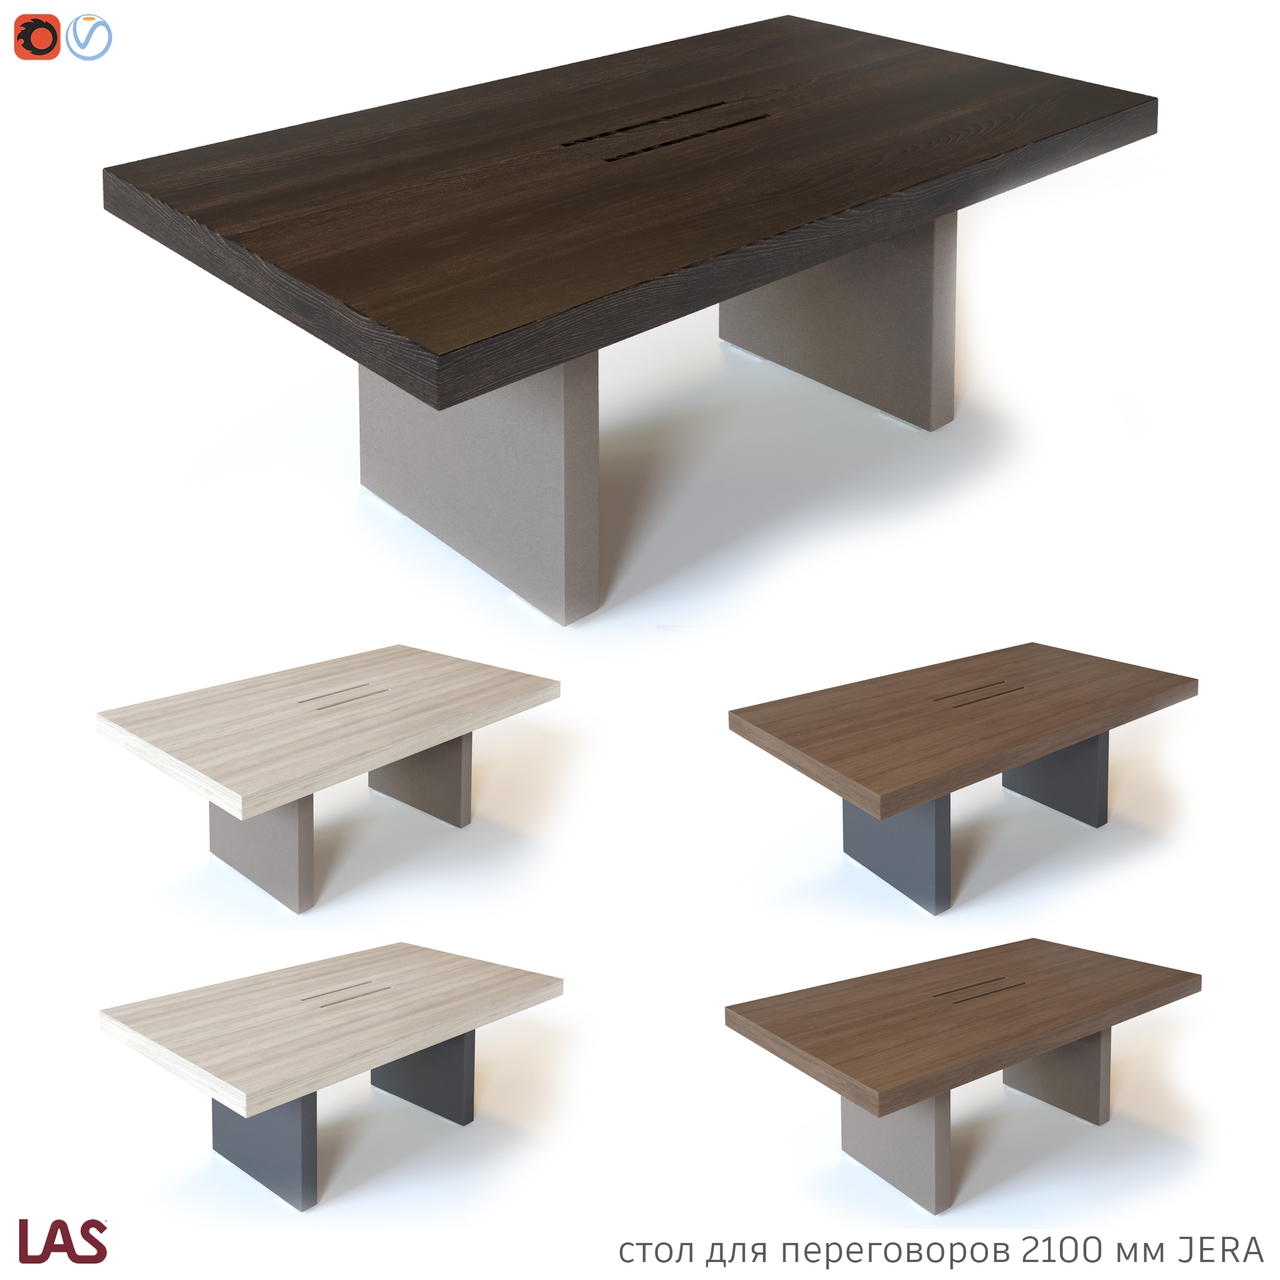 Превью 3D-модели стола для переговоров LAS Jera 159913